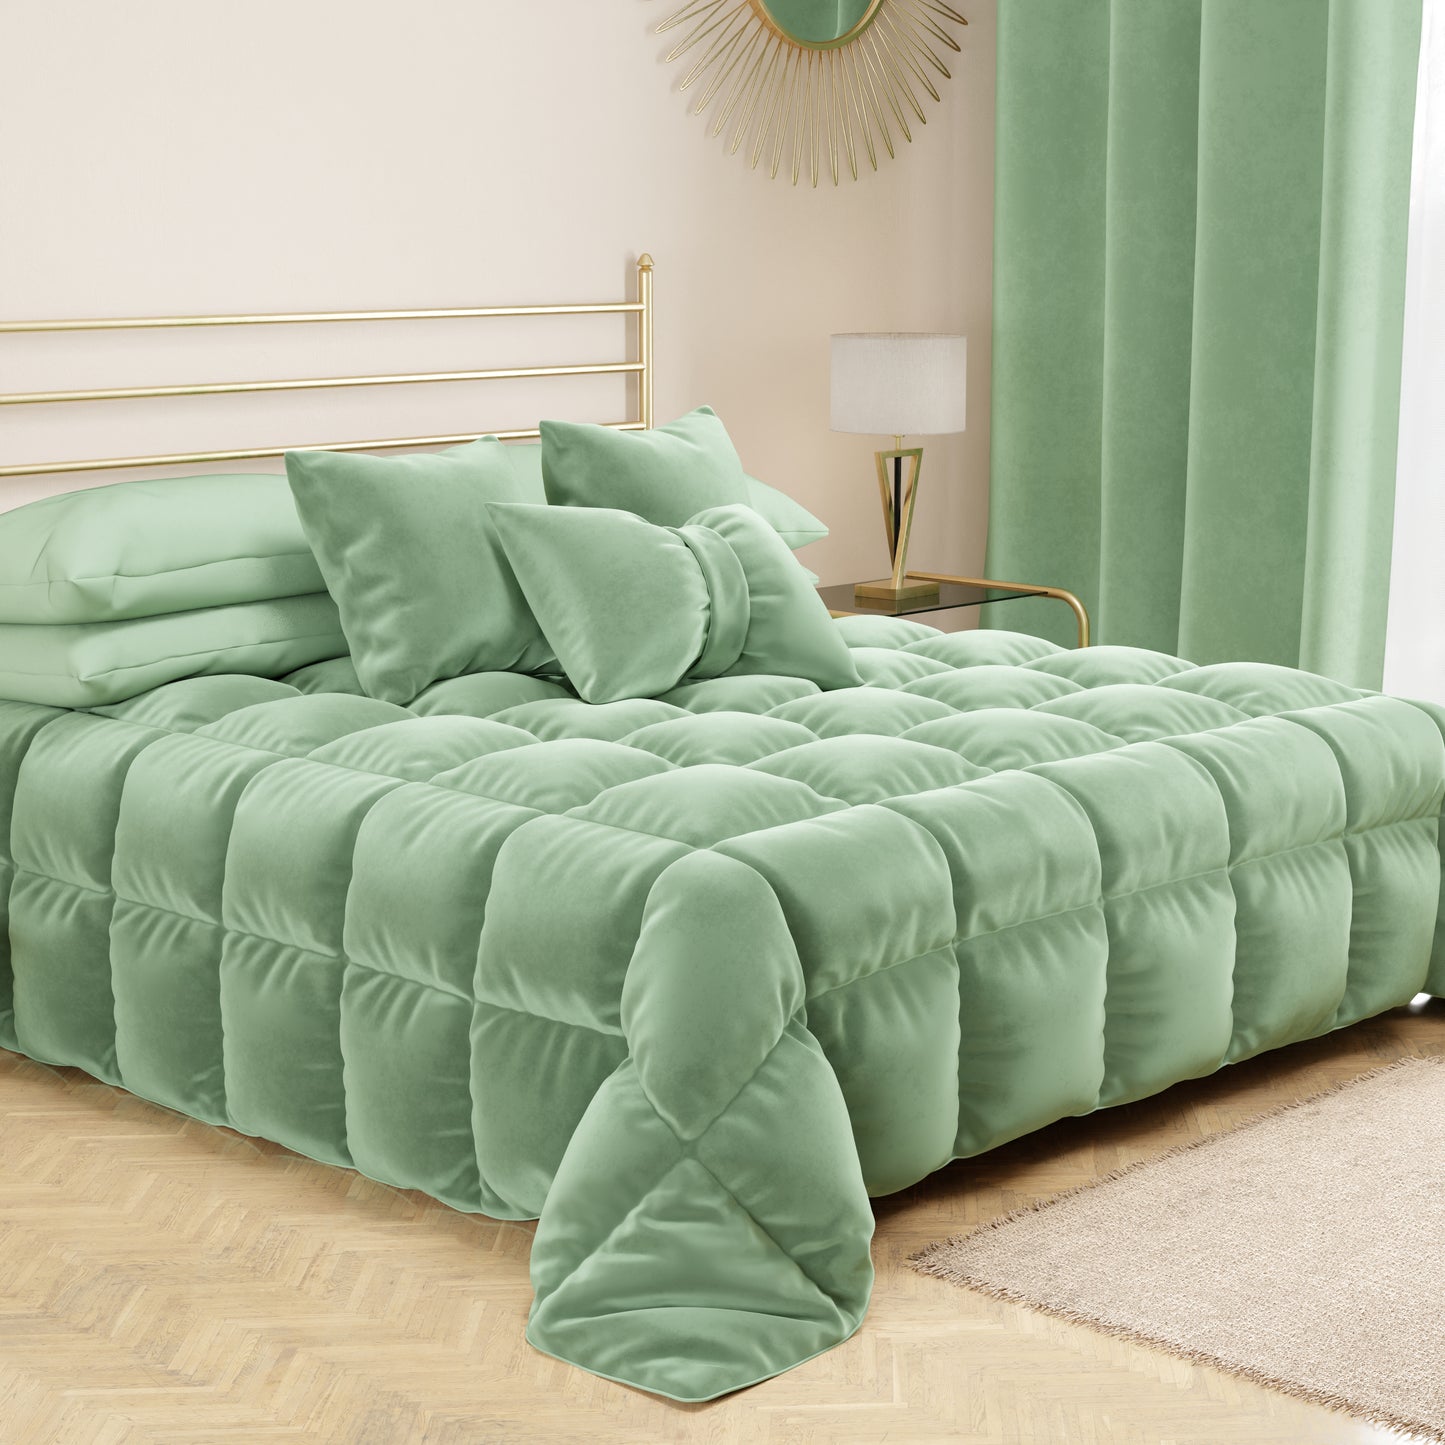 Sofa Cushions, Sage Bow Velvet Furnishing Cushions 1pc